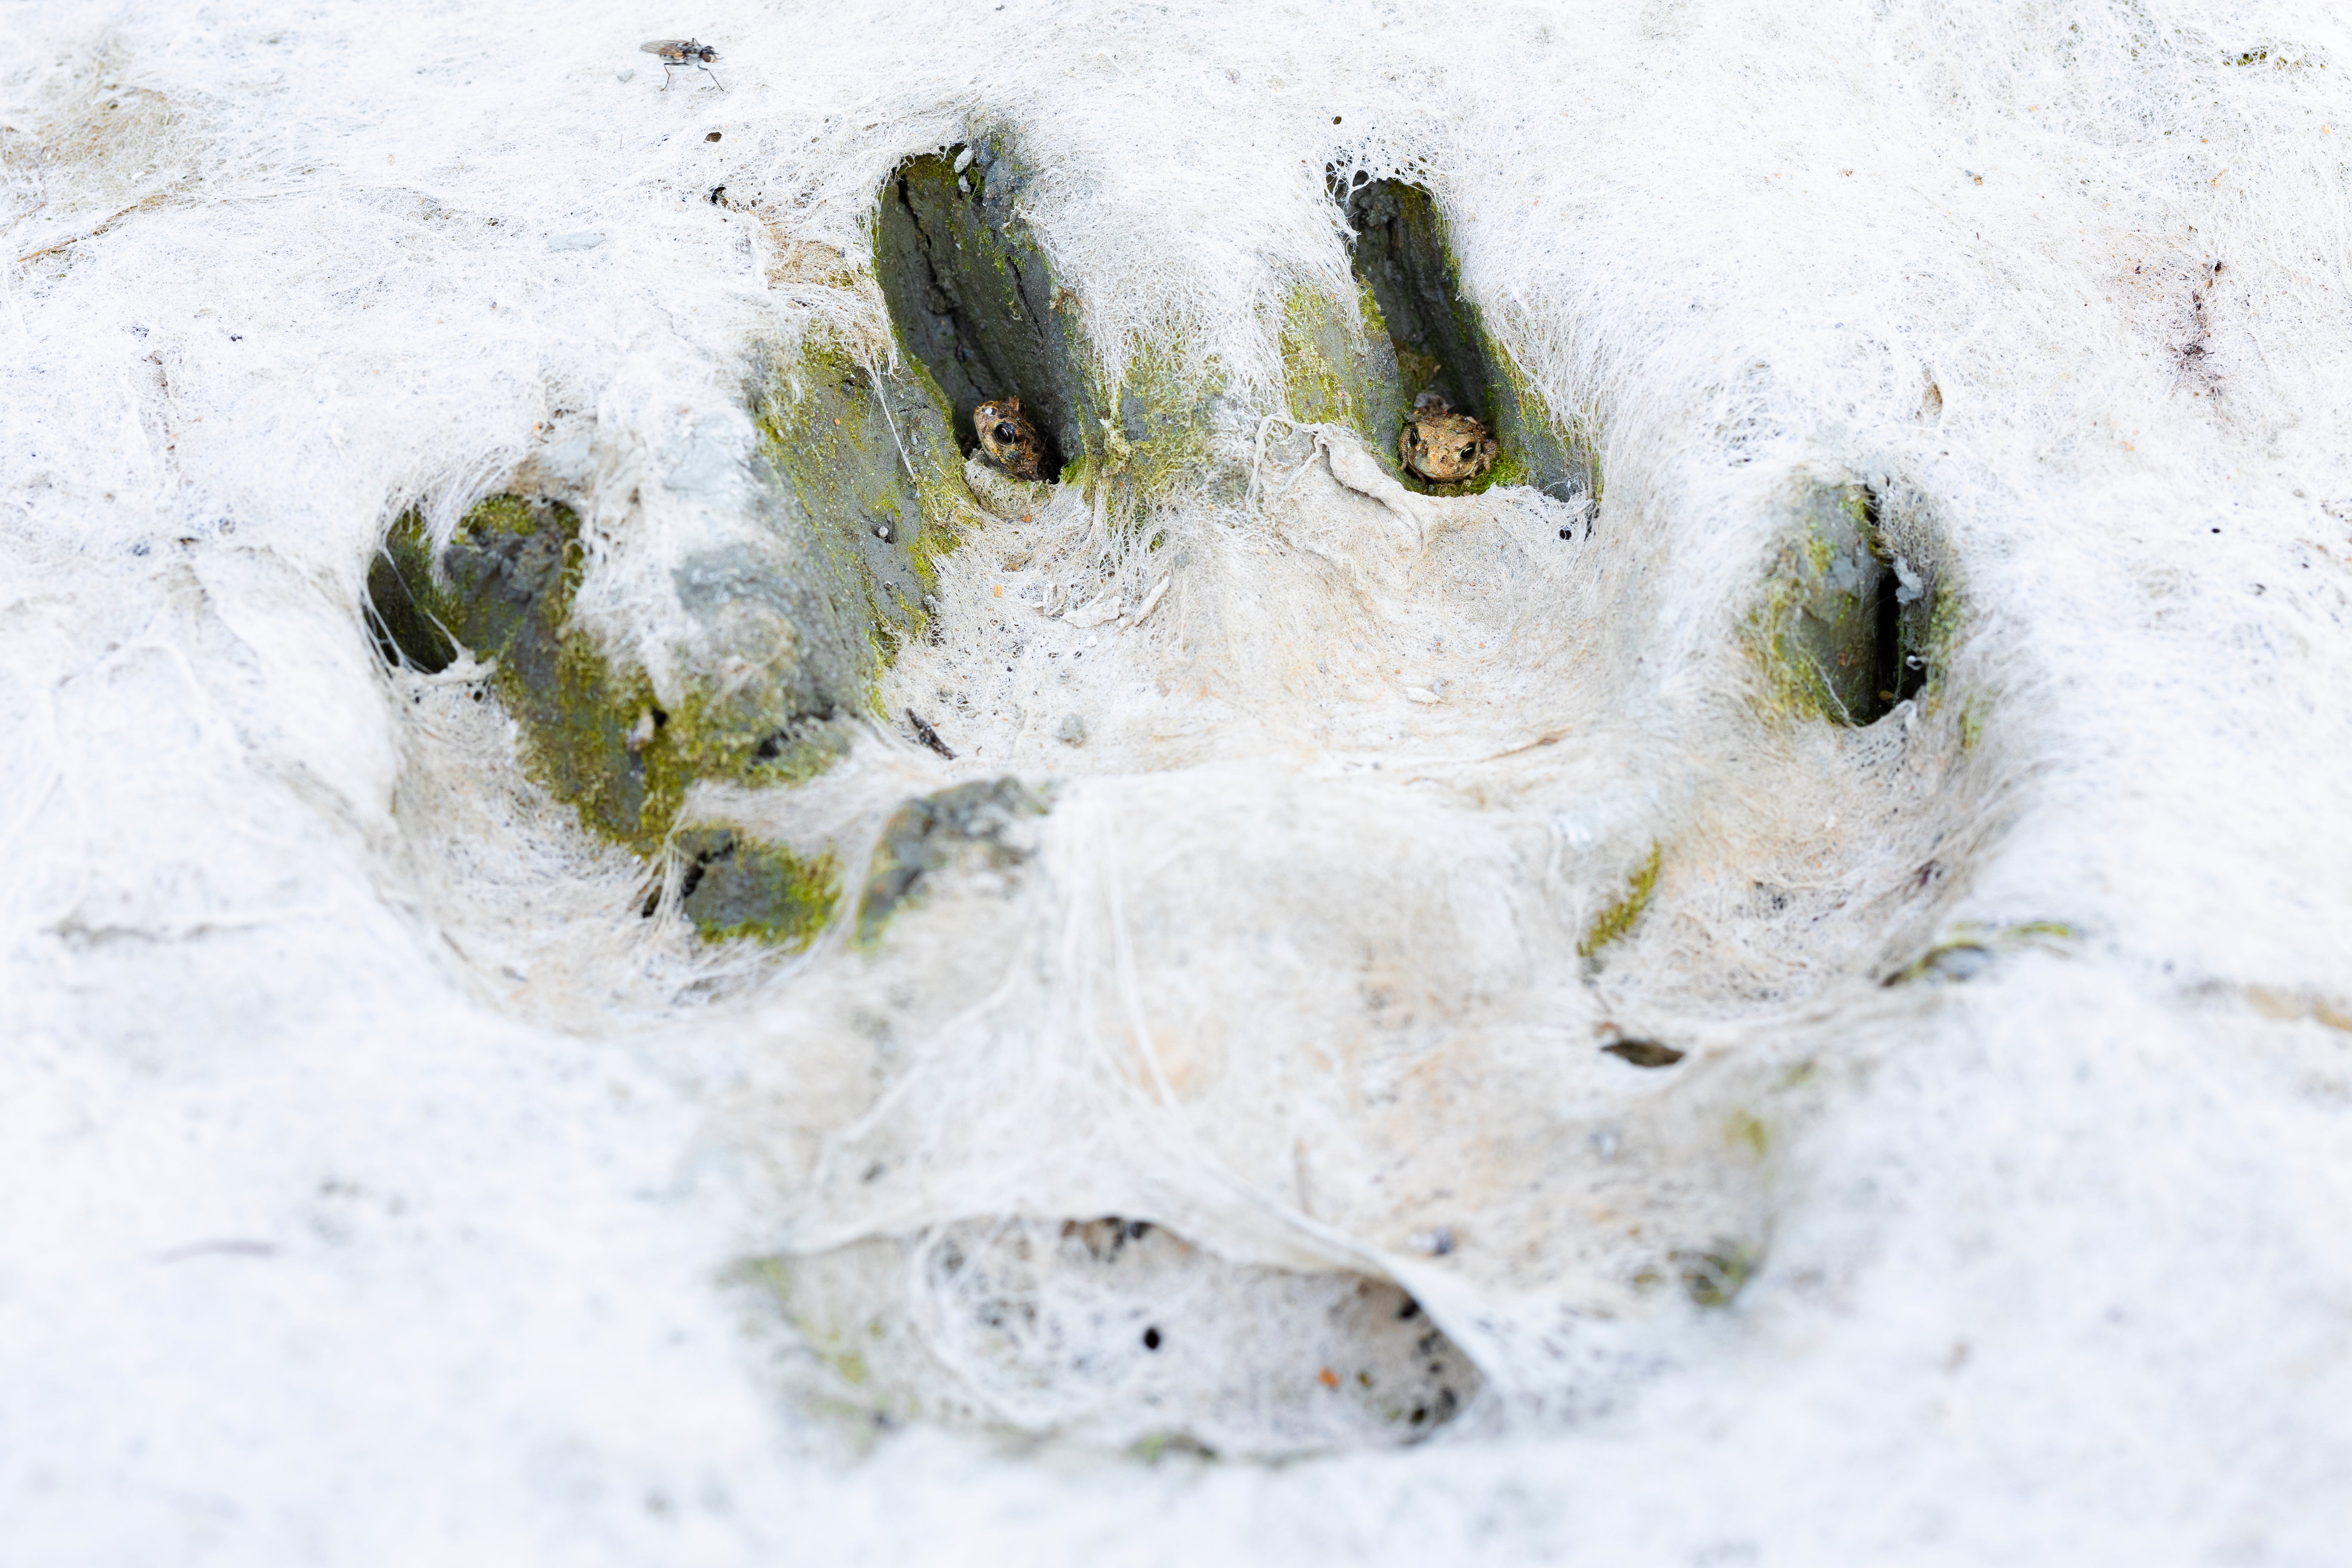 Miniature toads in the paw print of a mastiff. (Photo: Juan Jesus Gonzalez Ahumada)